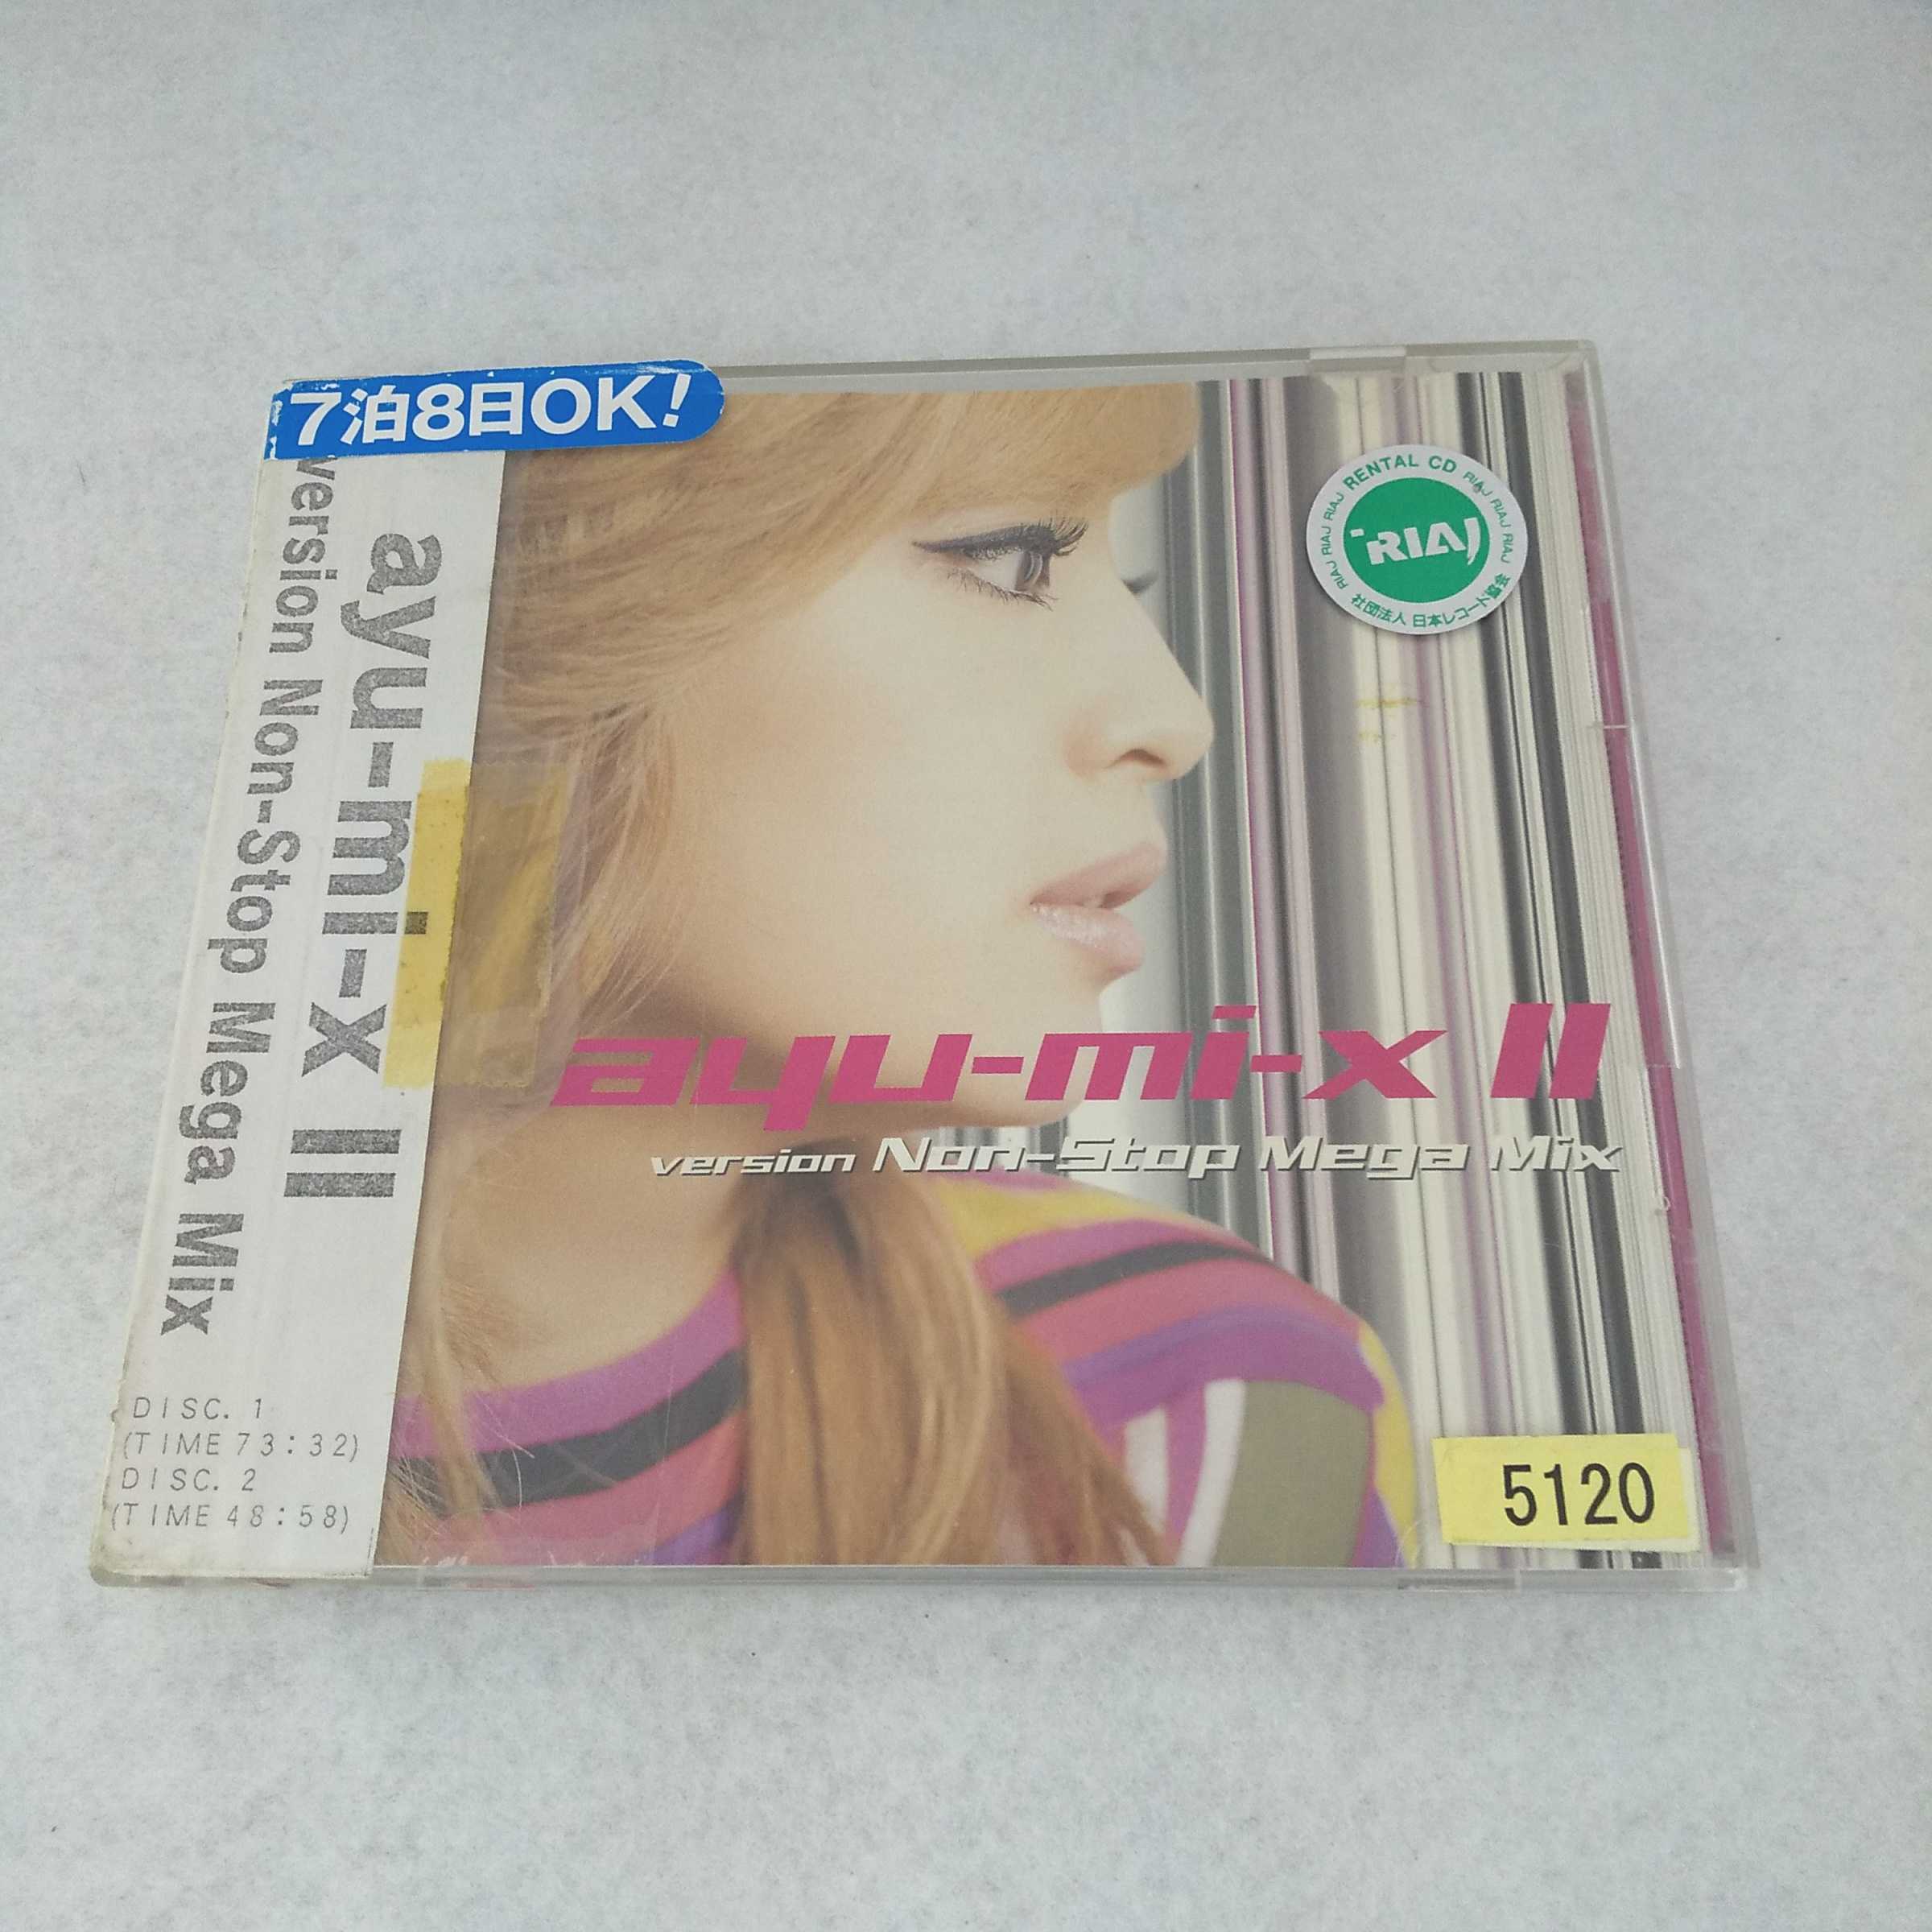 AC08500 【中古】 【CD】 ayu-mi-x 2 version Non-step Mega Mix/浜崎あゆみ